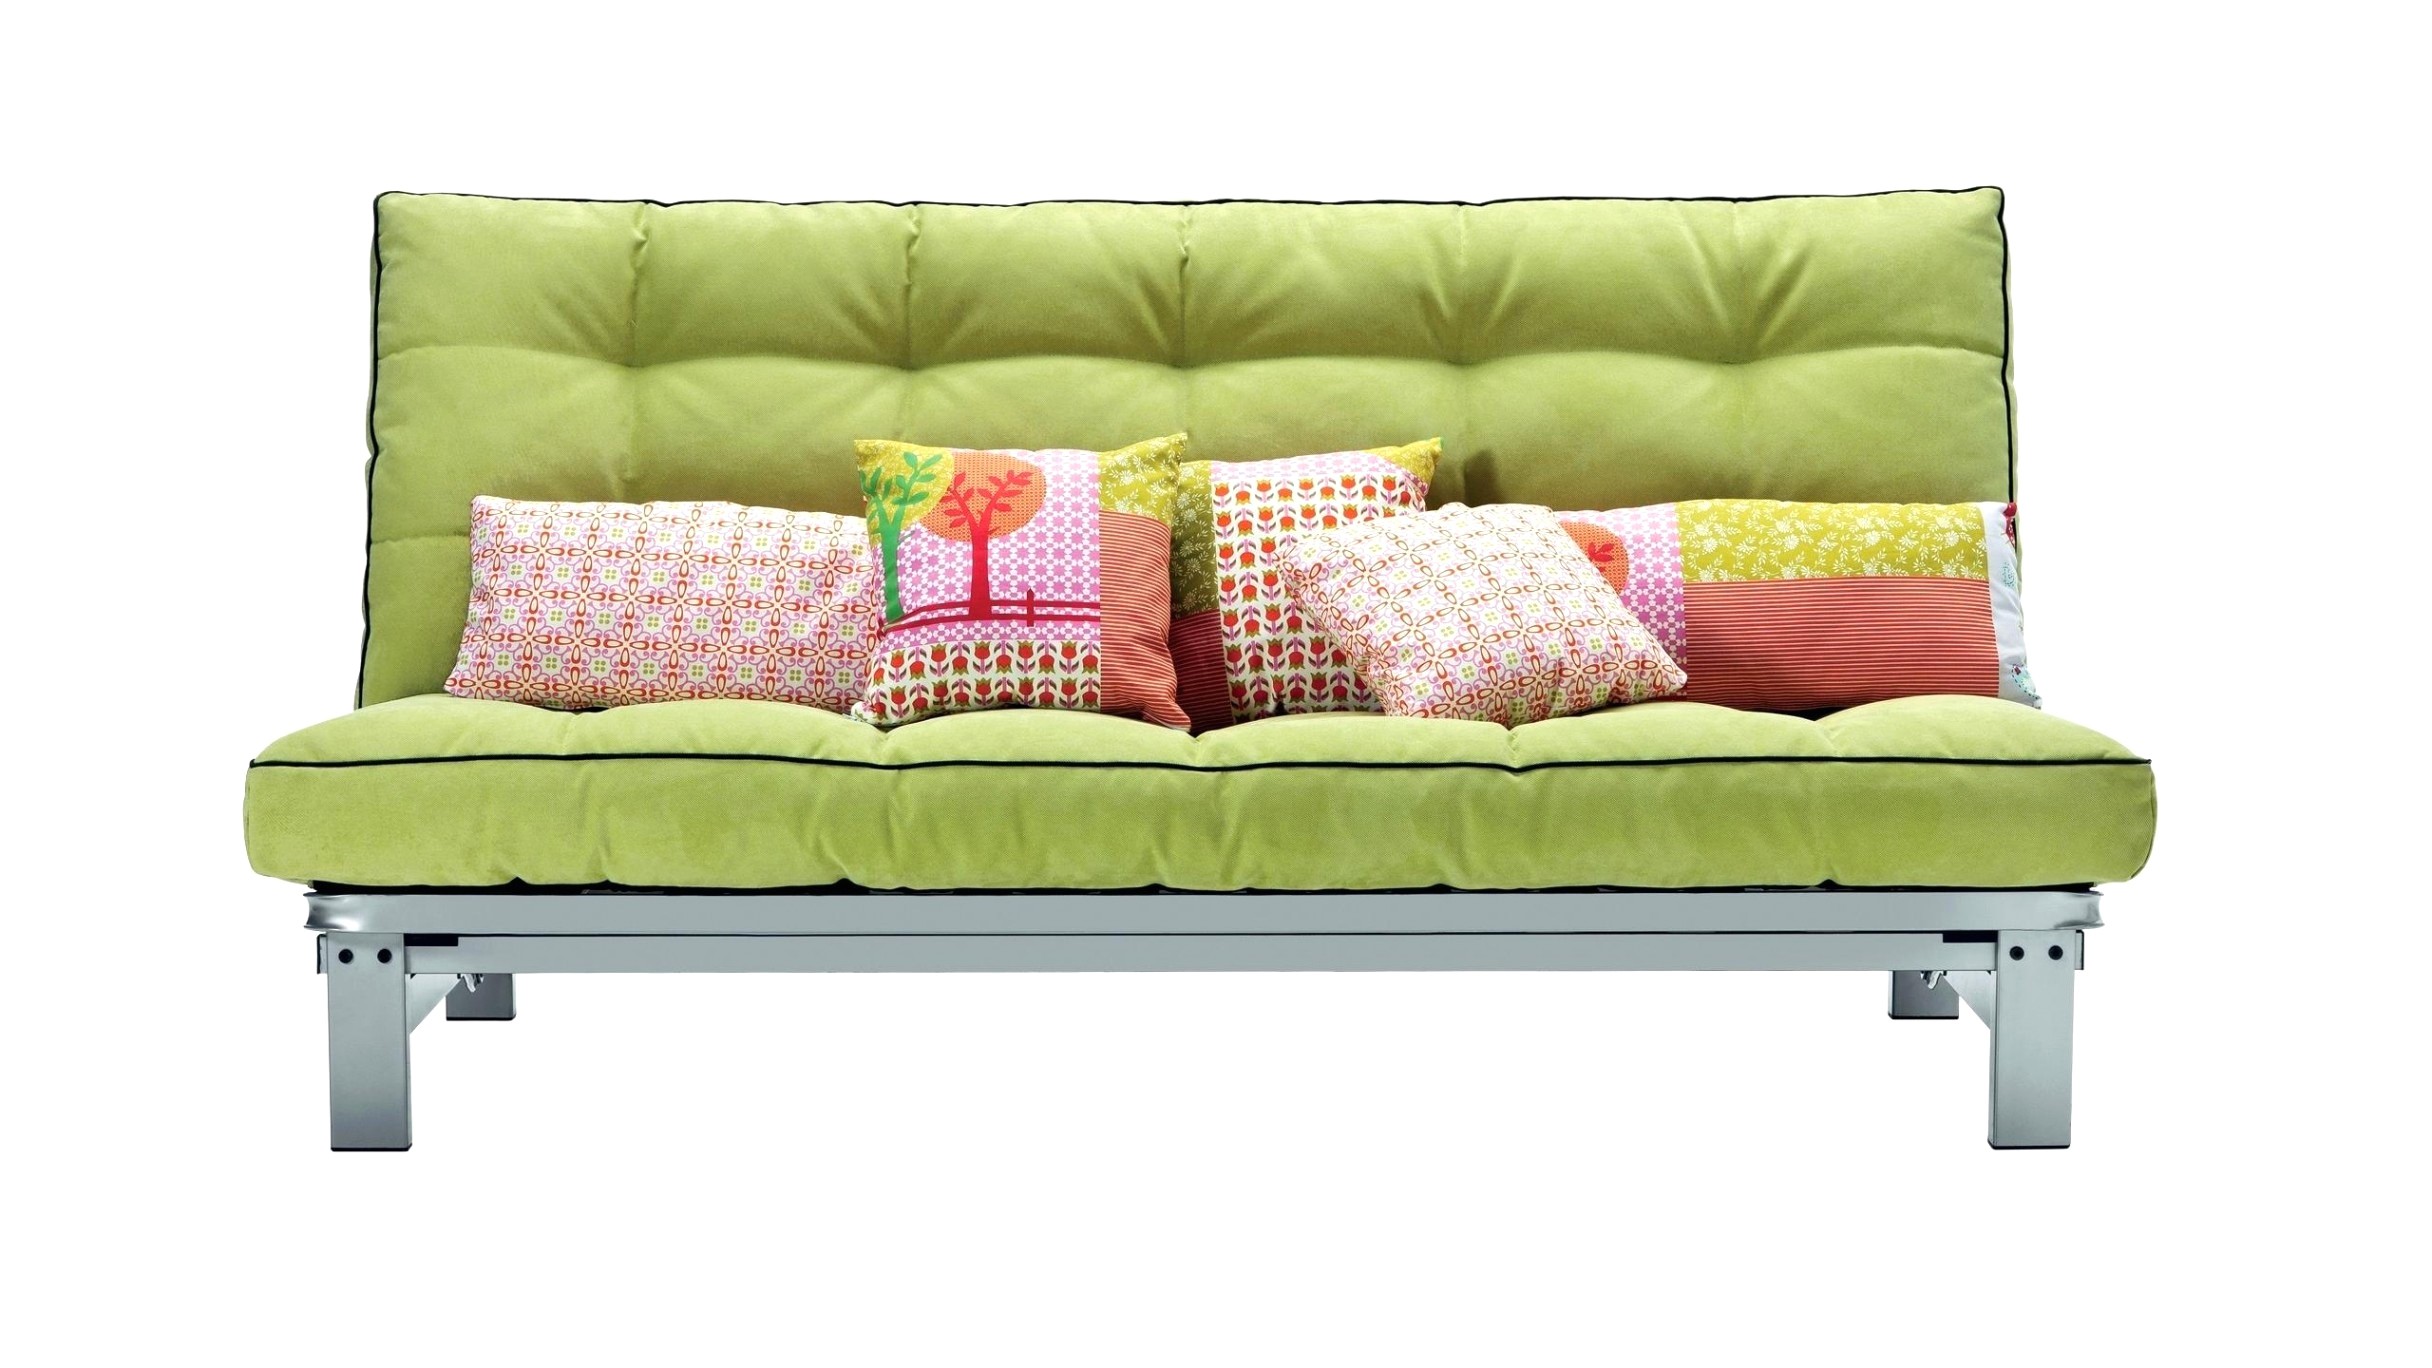 72 Inch Rv Sleeper sofa 50 Best Of Foam Sleeper sofa Images 50 Photos Home Improvement